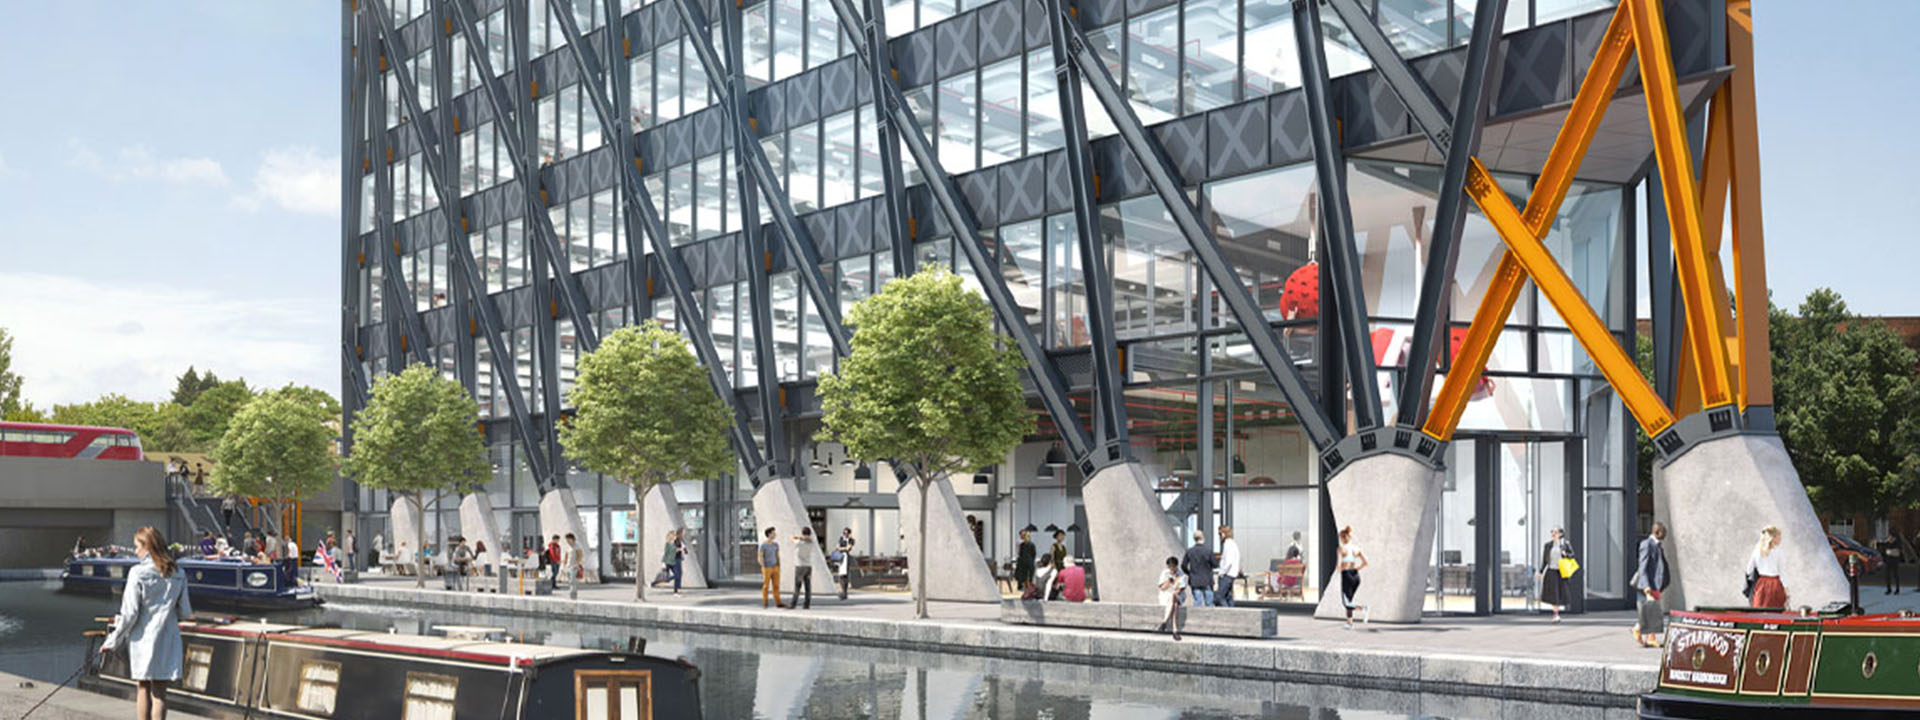 Project Update : Fantastic new development near Paddington station